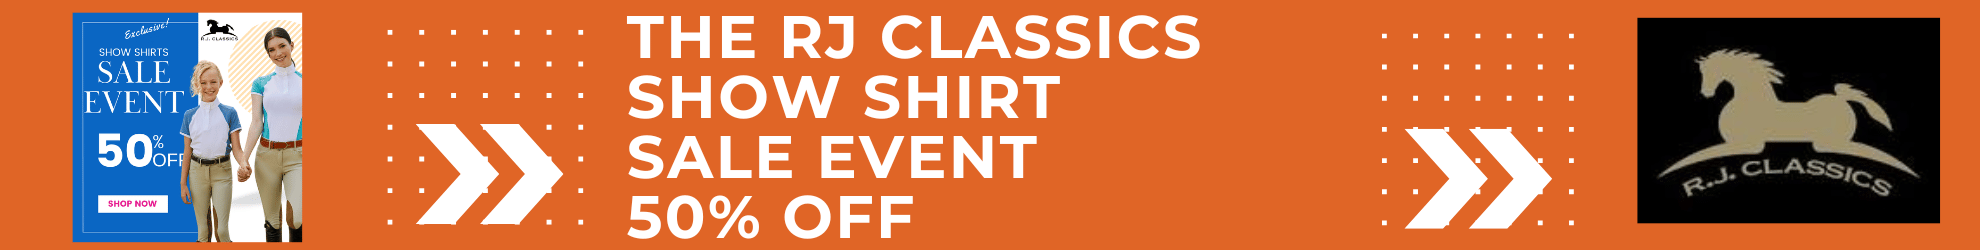 RJ Classics Show Shirt Sale Event